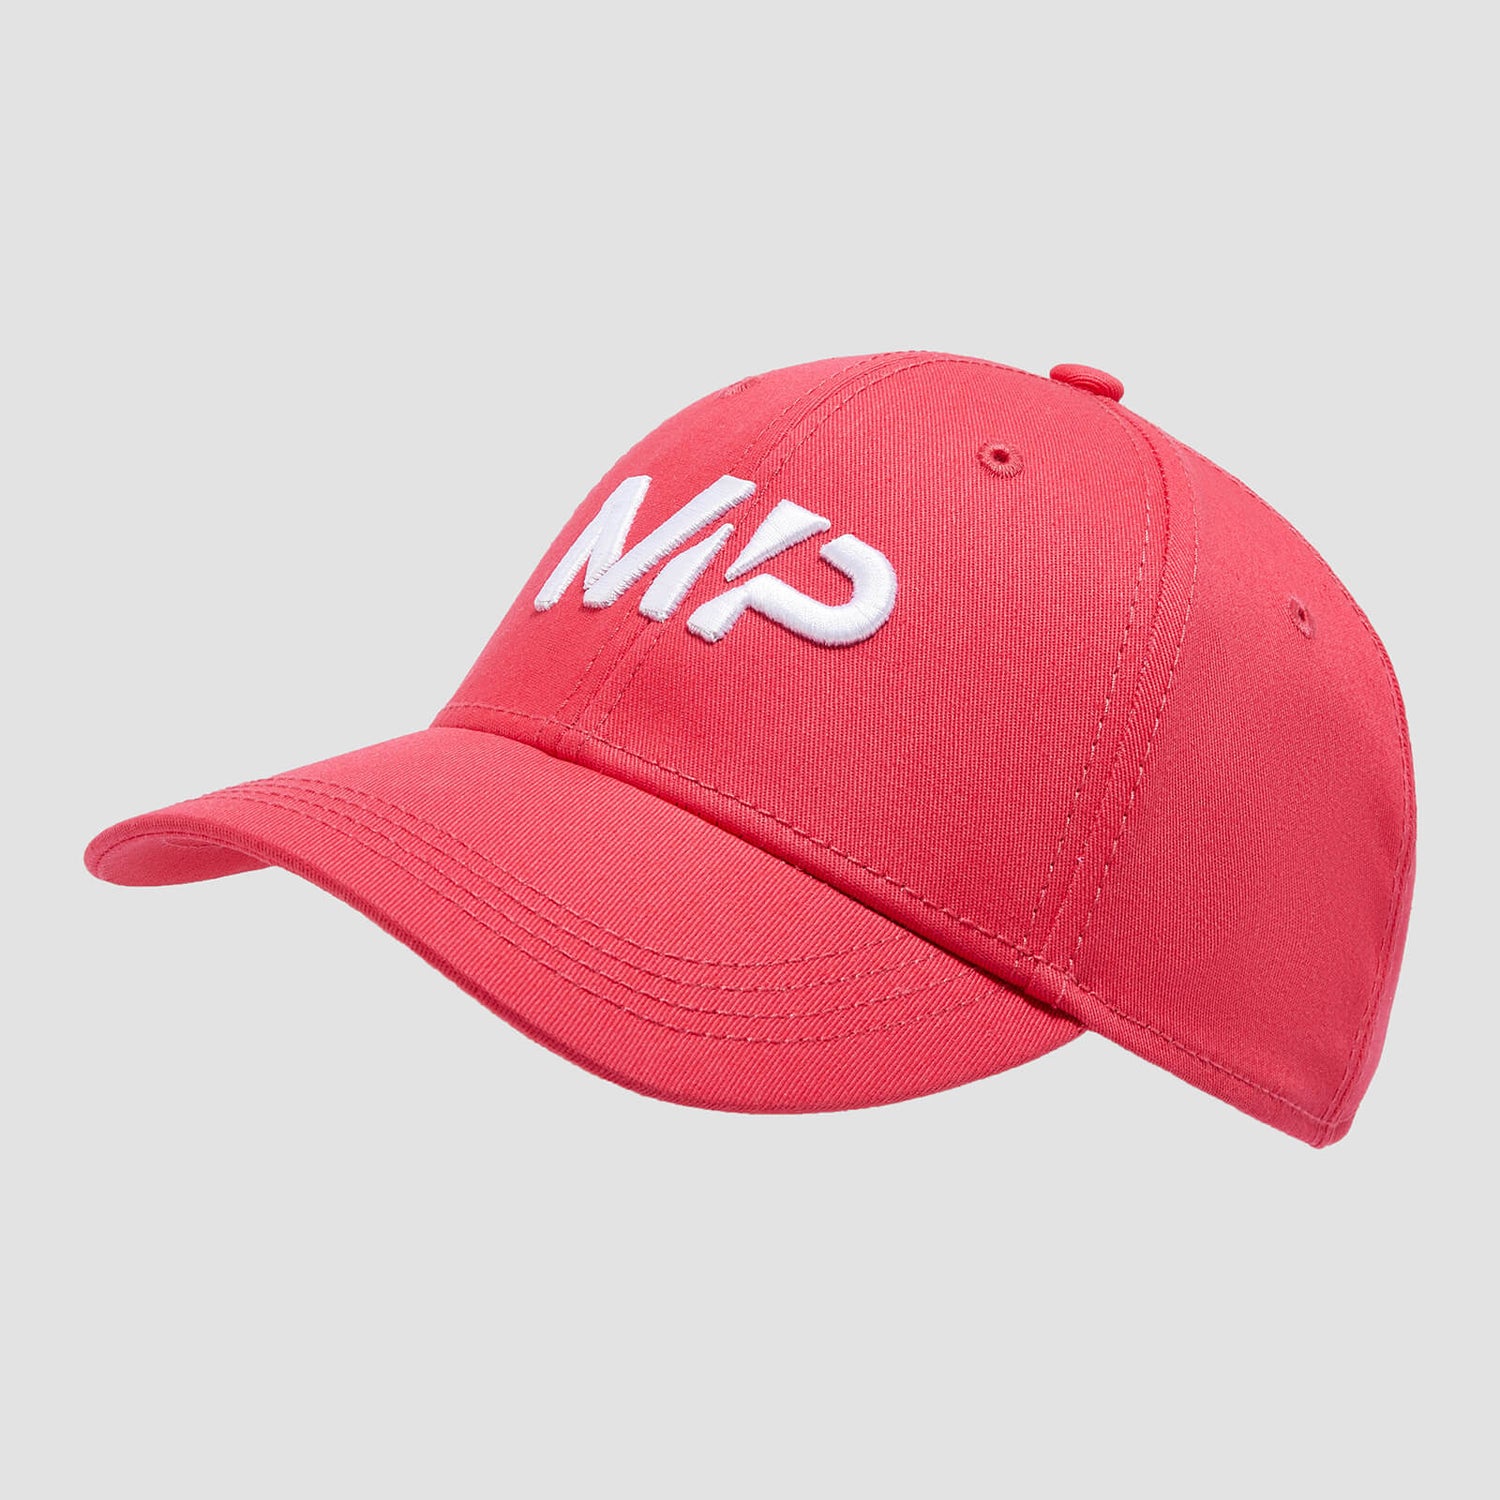 MP Baseball Cap - Wild Strawberry